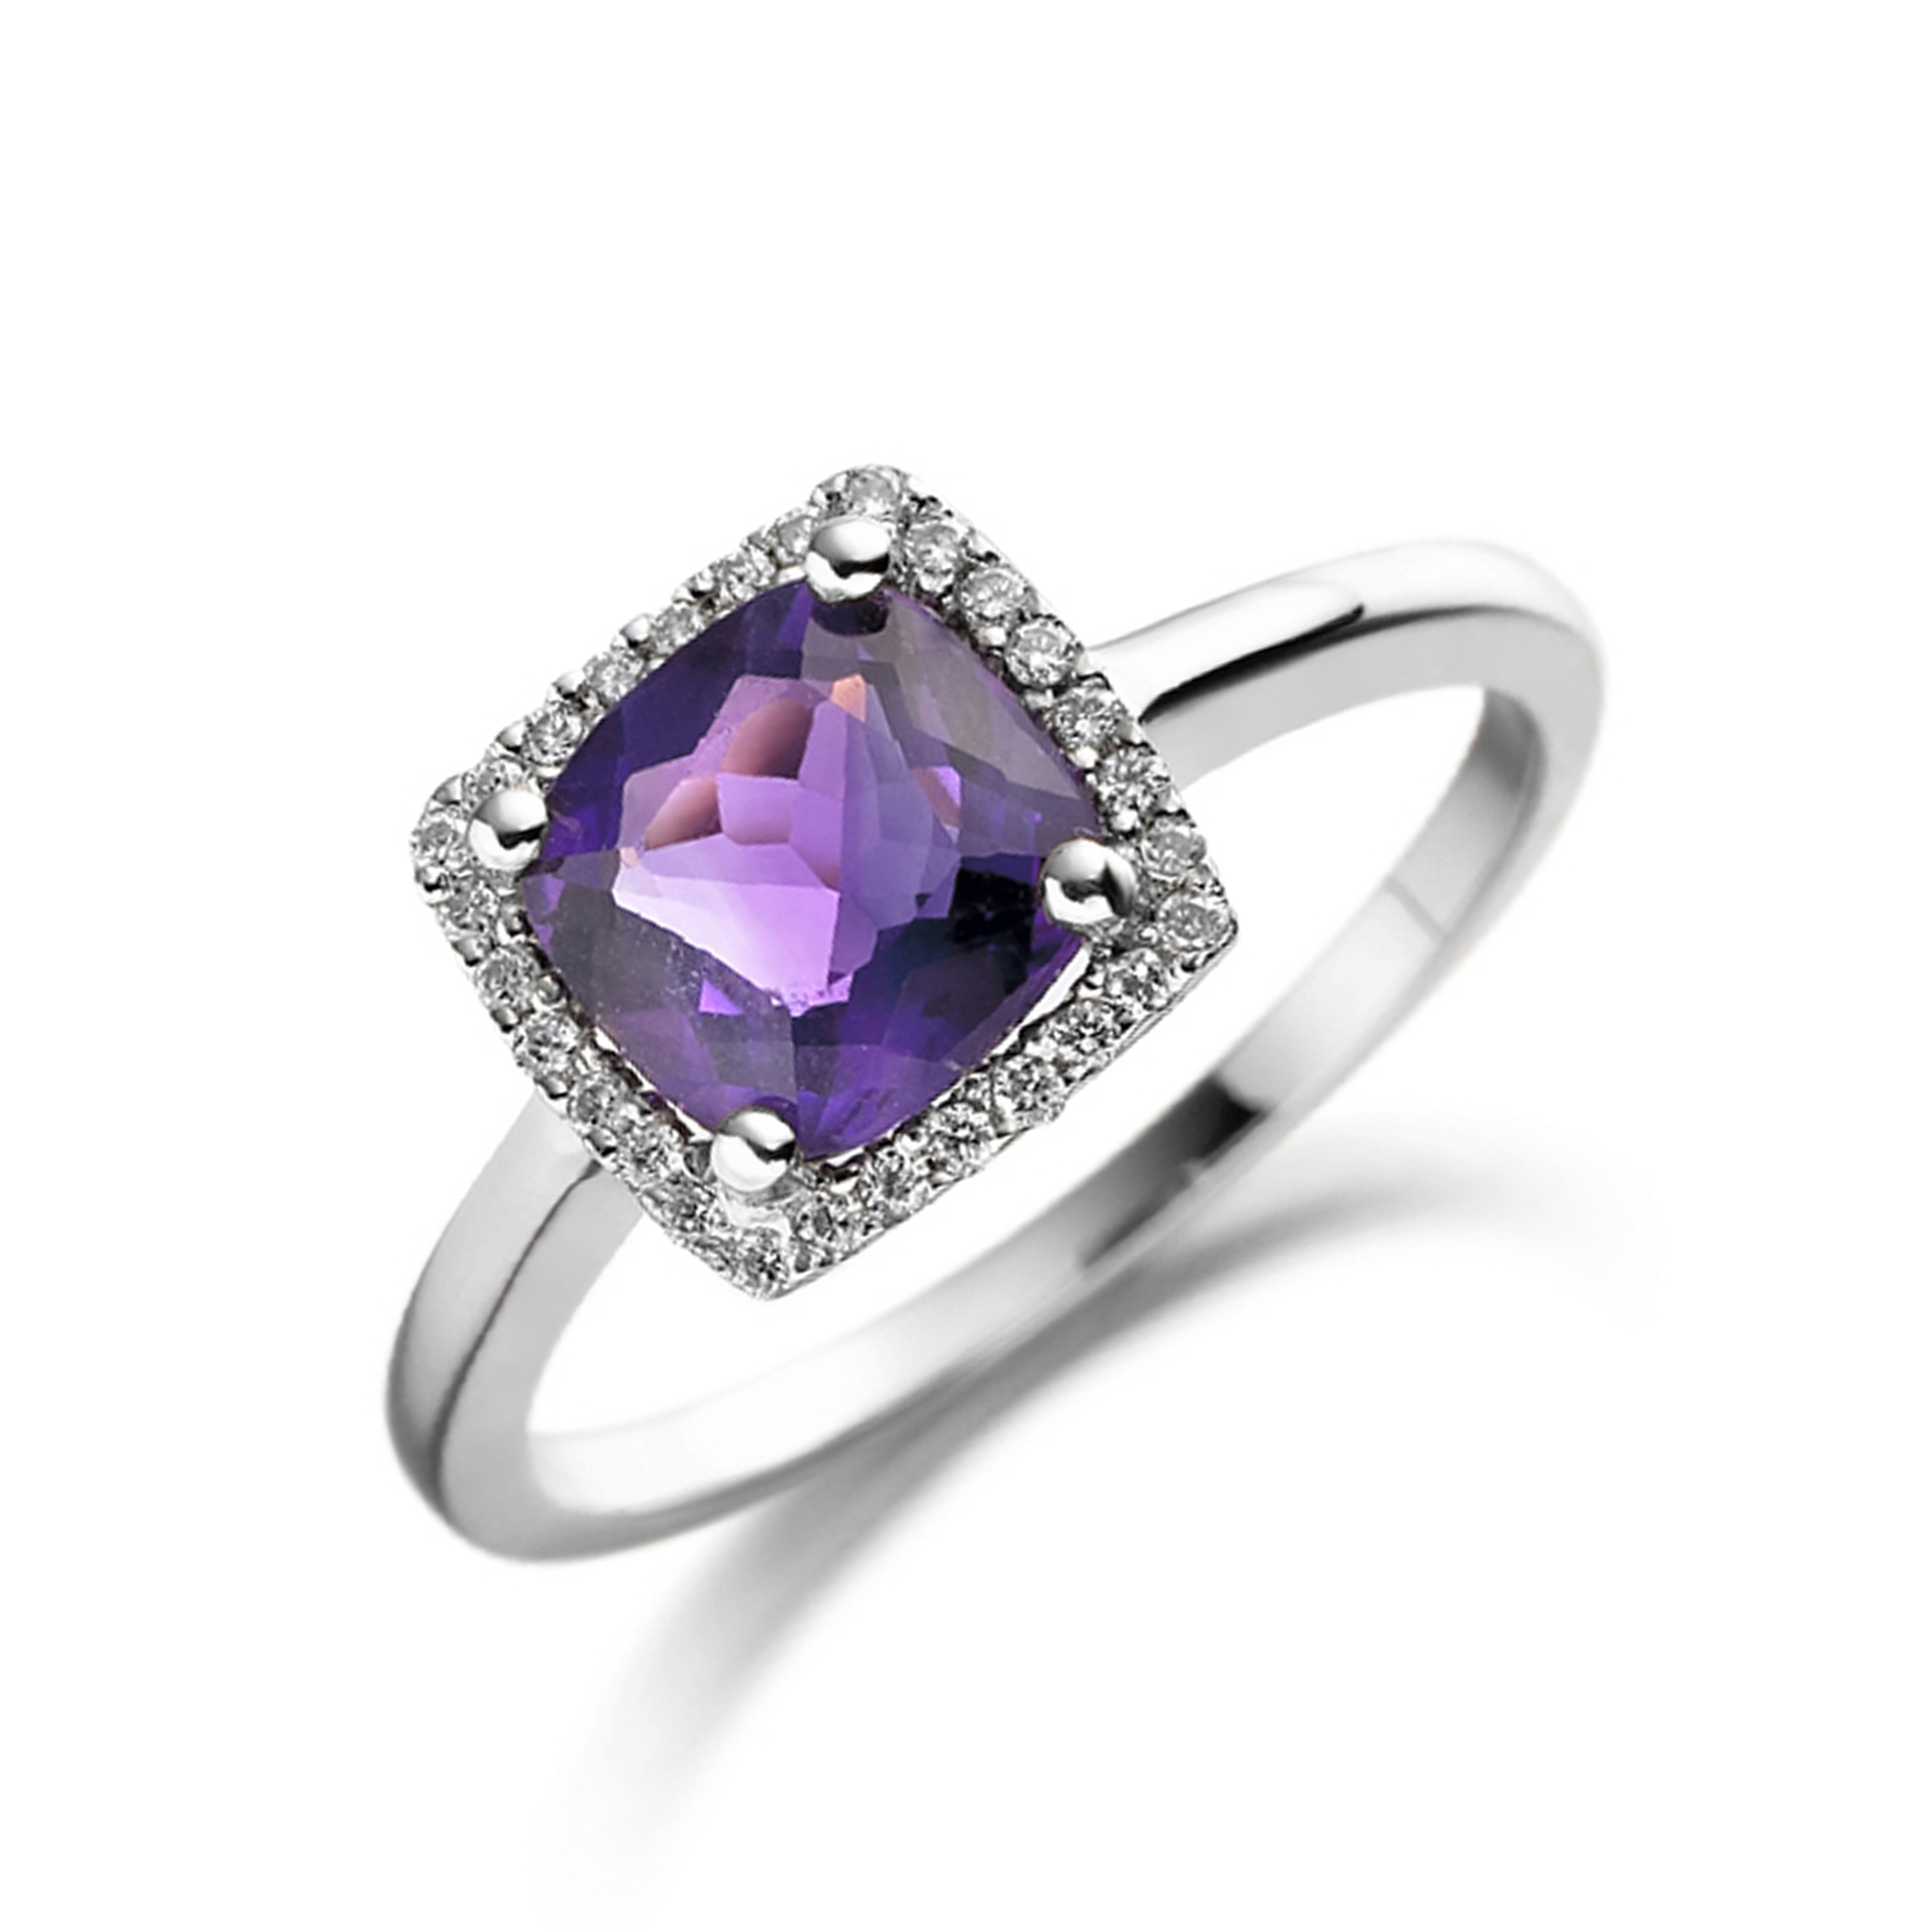 5mm Cushion Sqare Amethyst Stones On Shoulder Diamond And Gemstone Engagement Ring